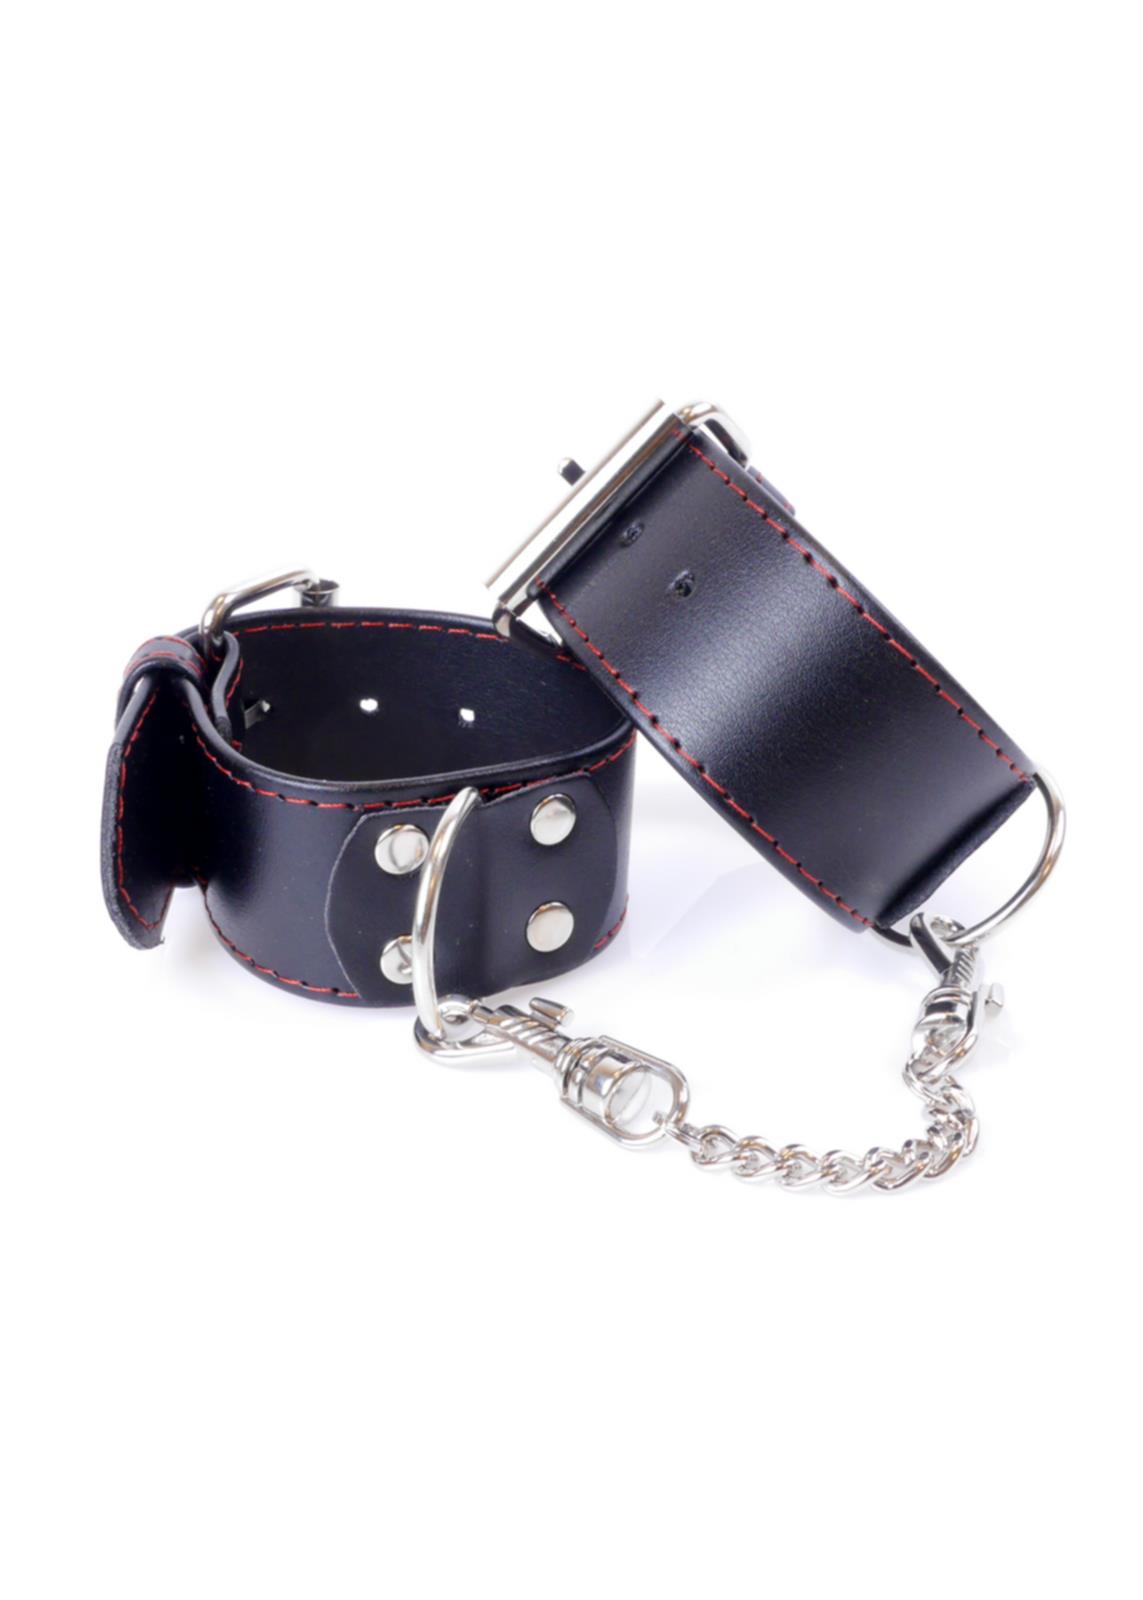 Bossoftoys - 33-00115 - Handcuffs - Studs - Wristcuffs  - 4 cm  - Red line